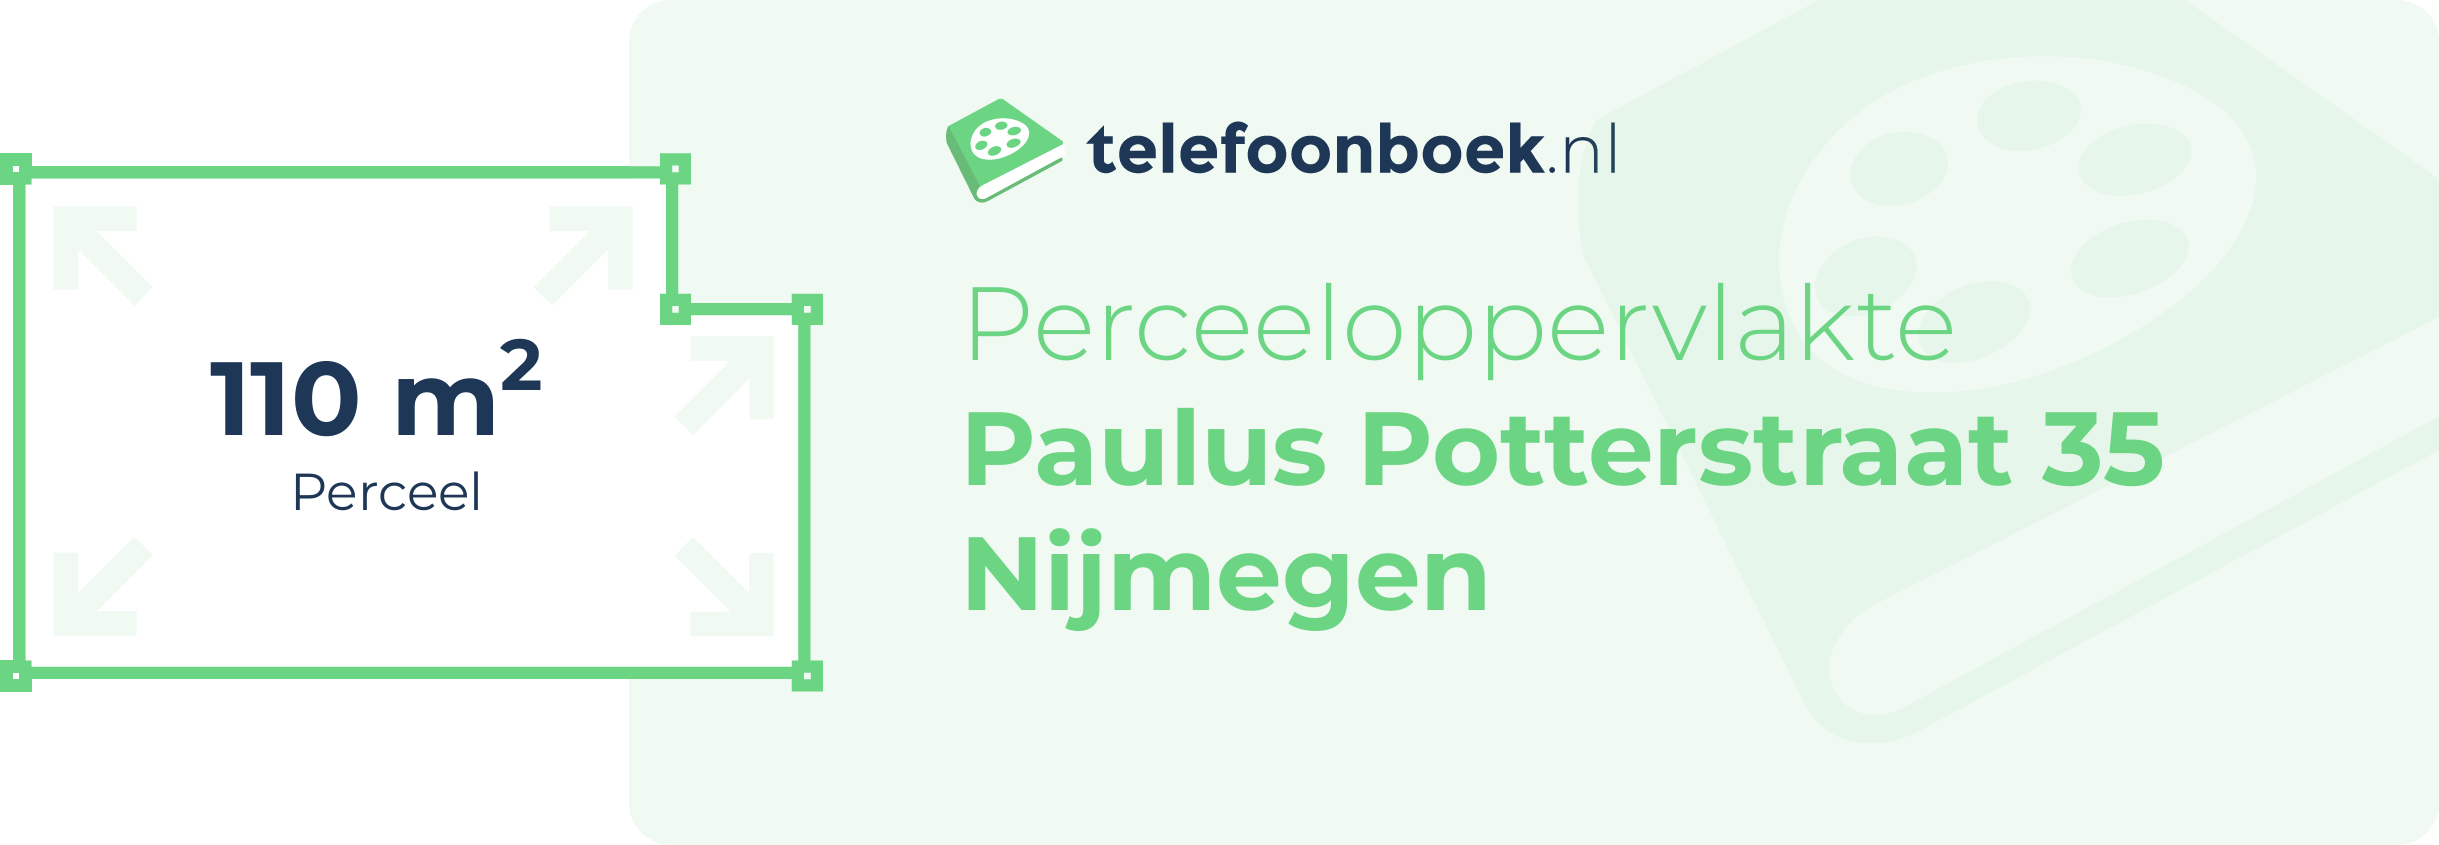 Perceeloppervlakte Paulus Potterstraat 35 Nijmegen